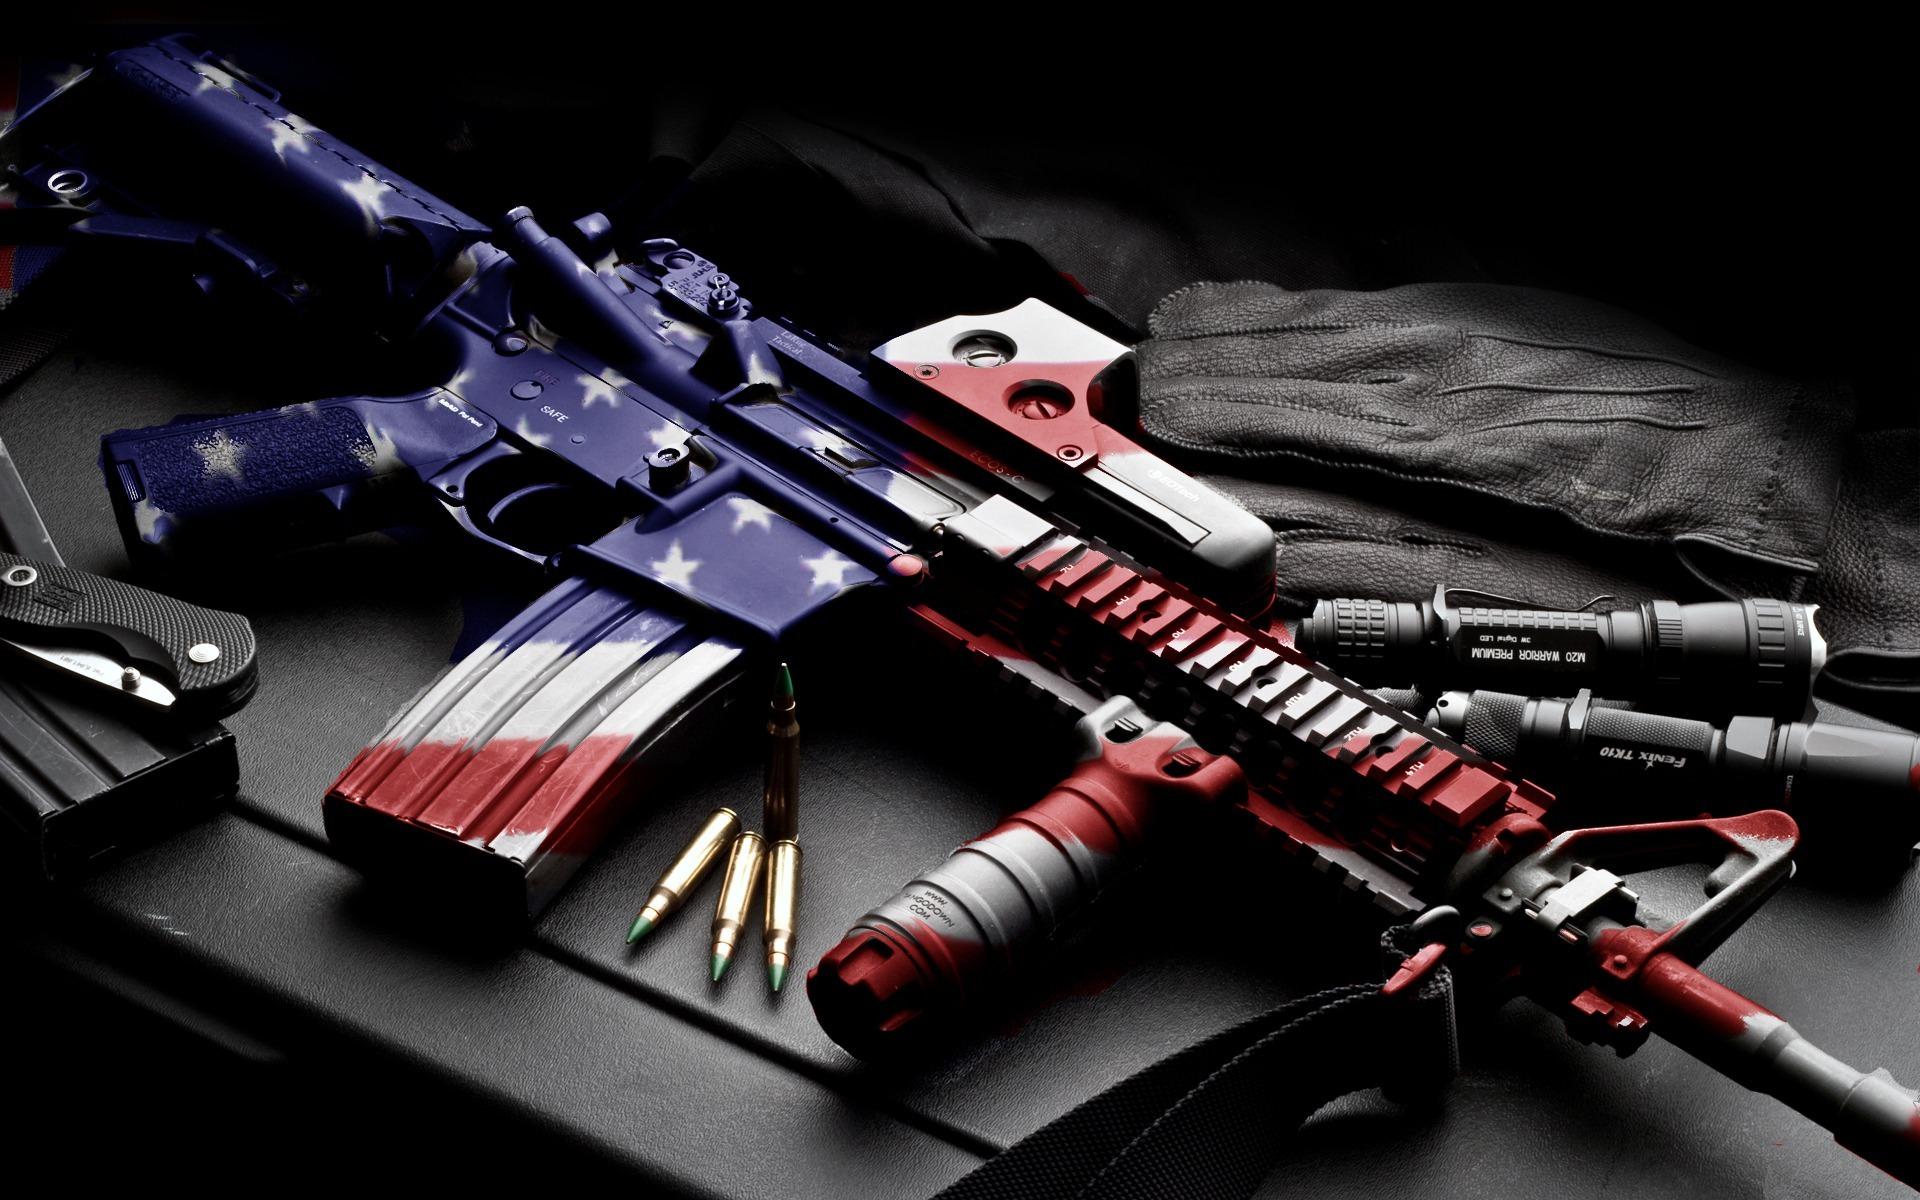 American flag printed on Rifle HD wallpaper. HD Latest Wallpaper